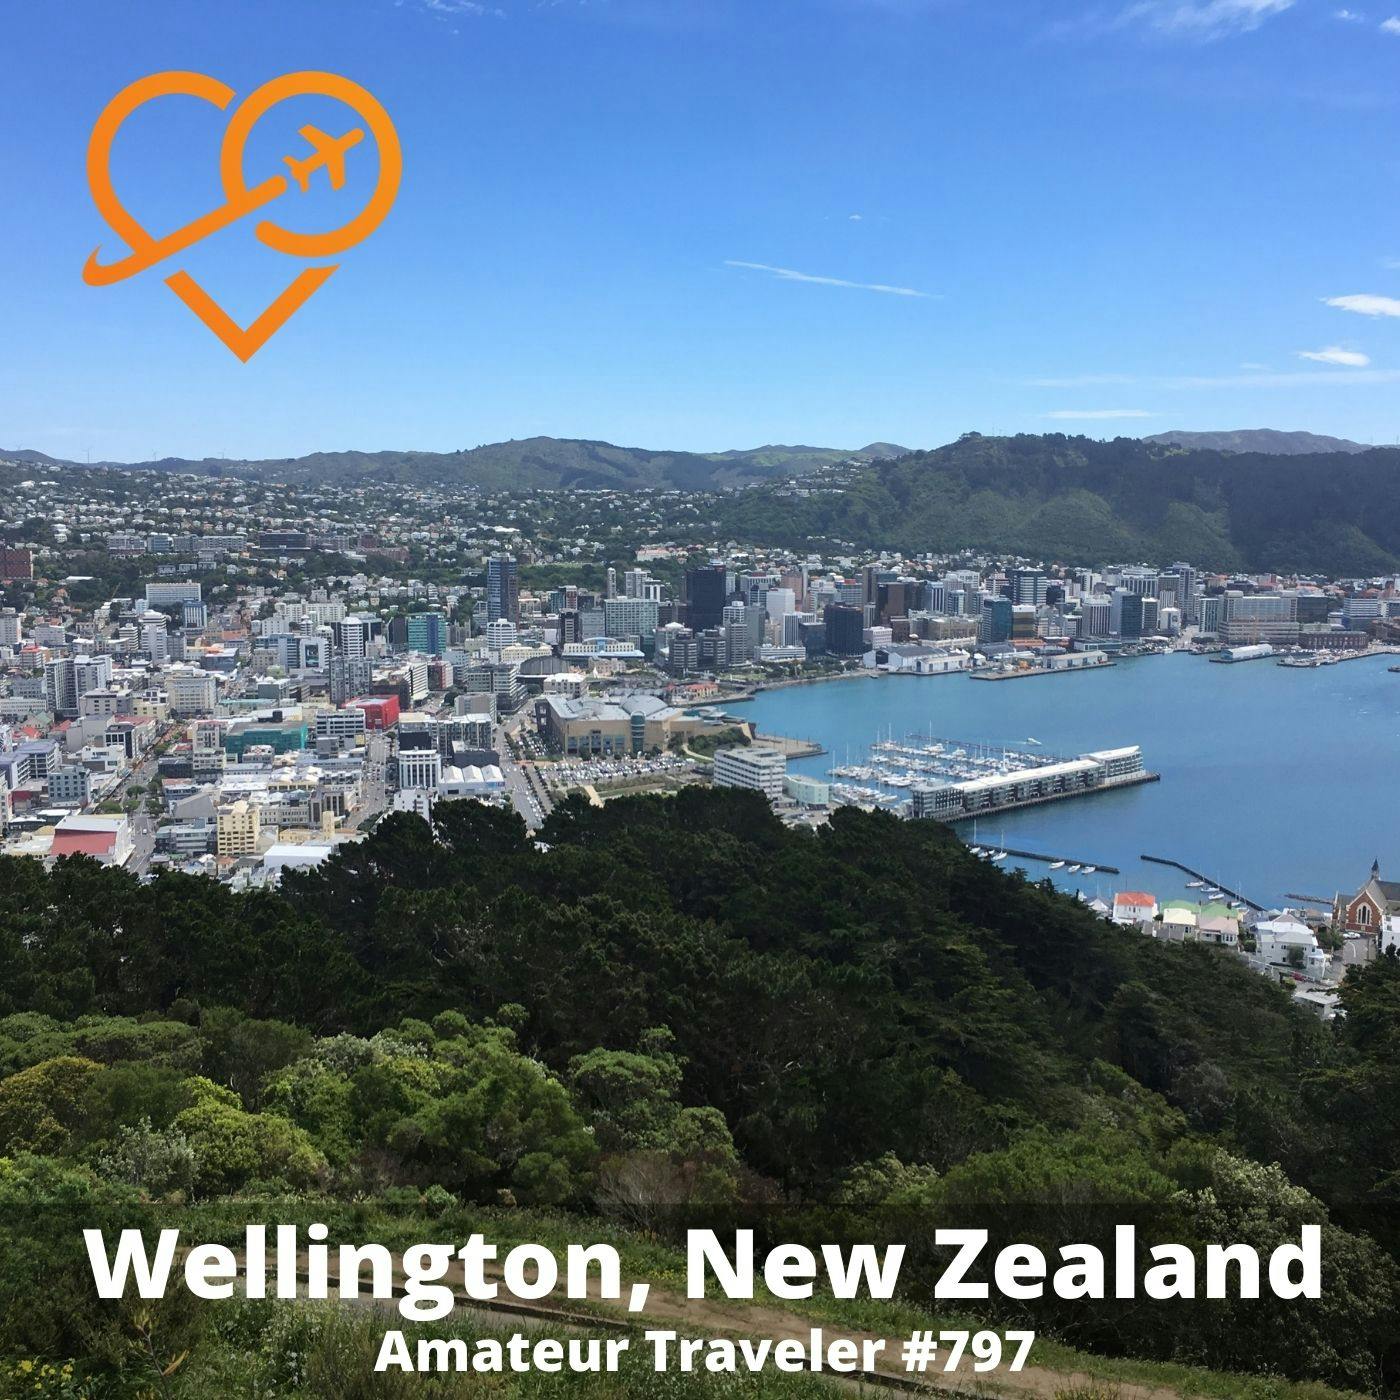 AT#797 - Travel to Wellington, New Zealand